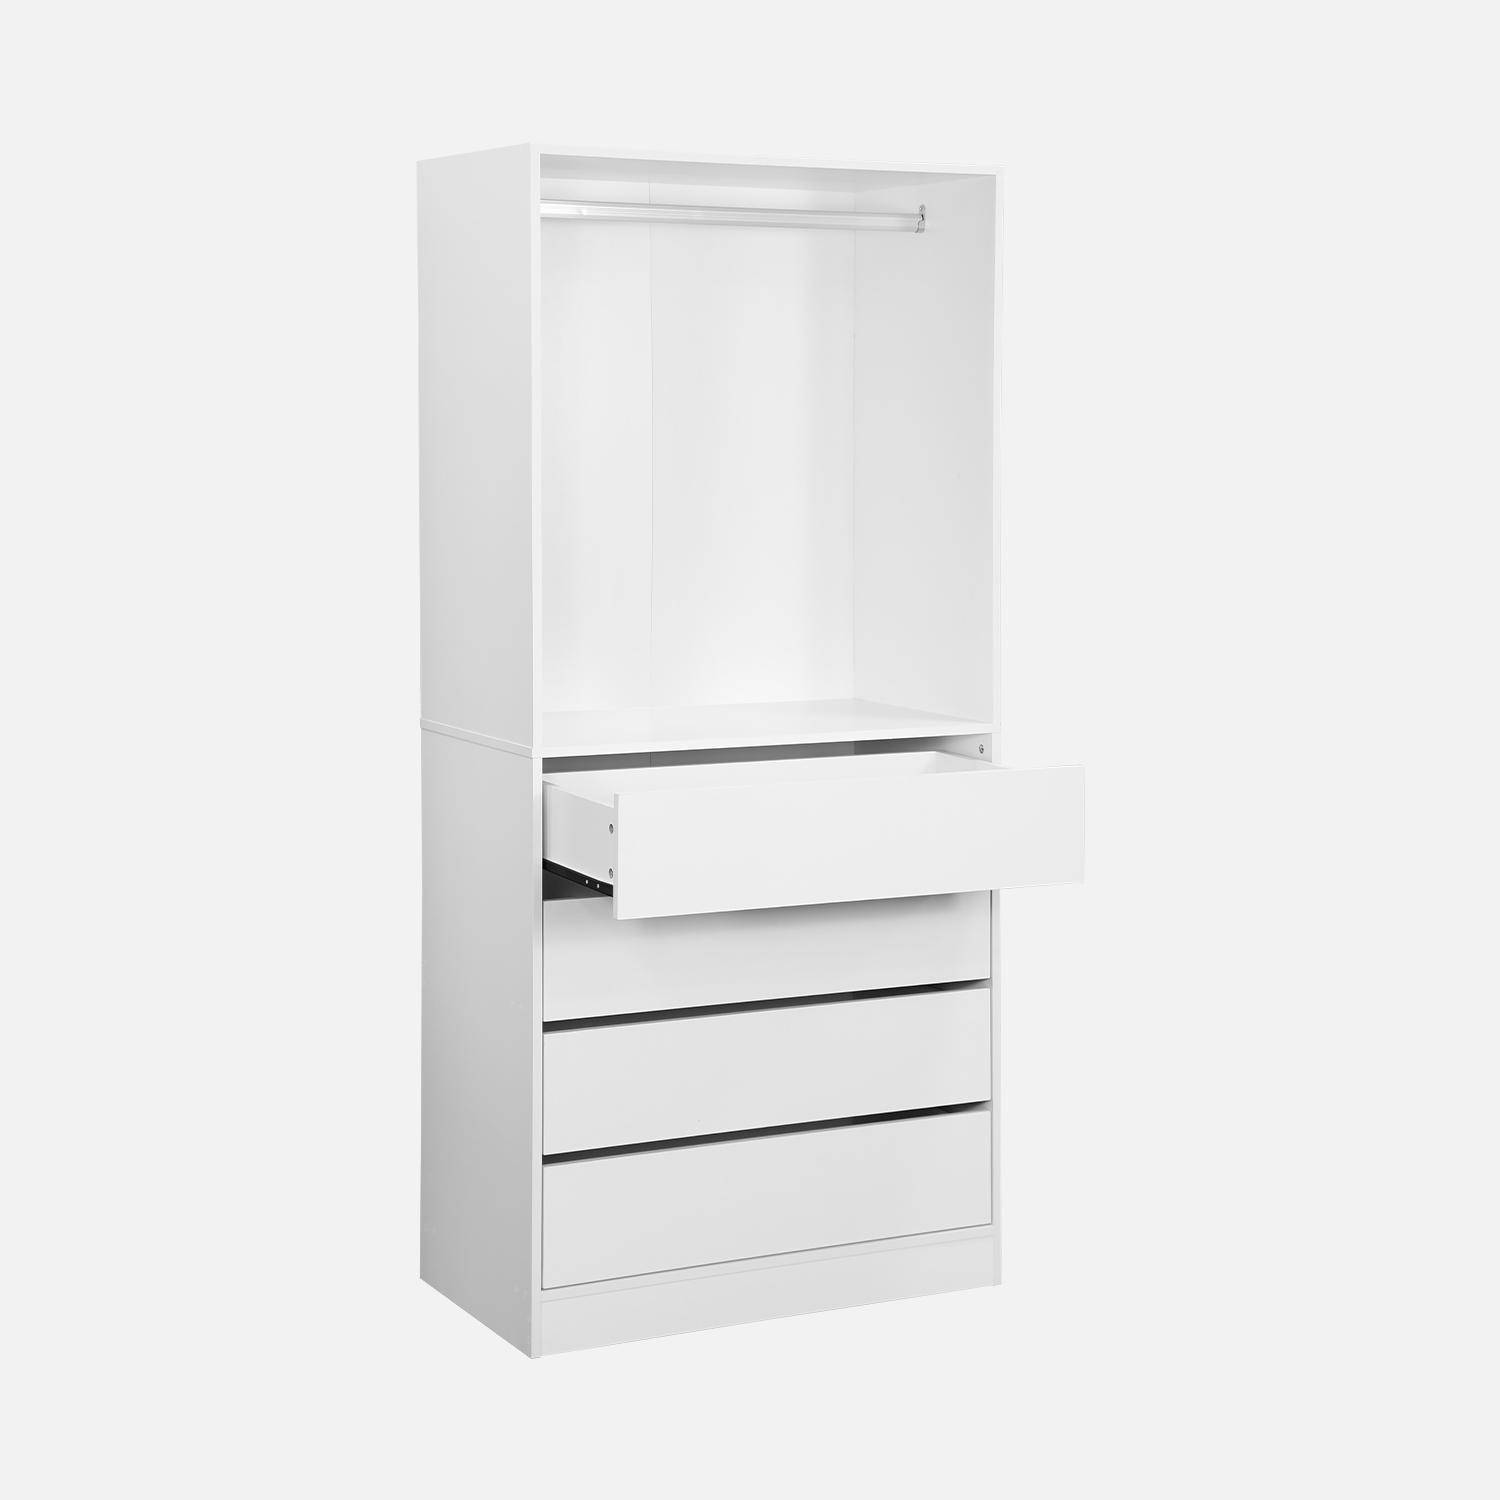 Modular open wardrobe drawer and rail unit, 80x45x180cm, Modulo, 4 drawers, 1 clothes rail, White,sweeek,Photo6